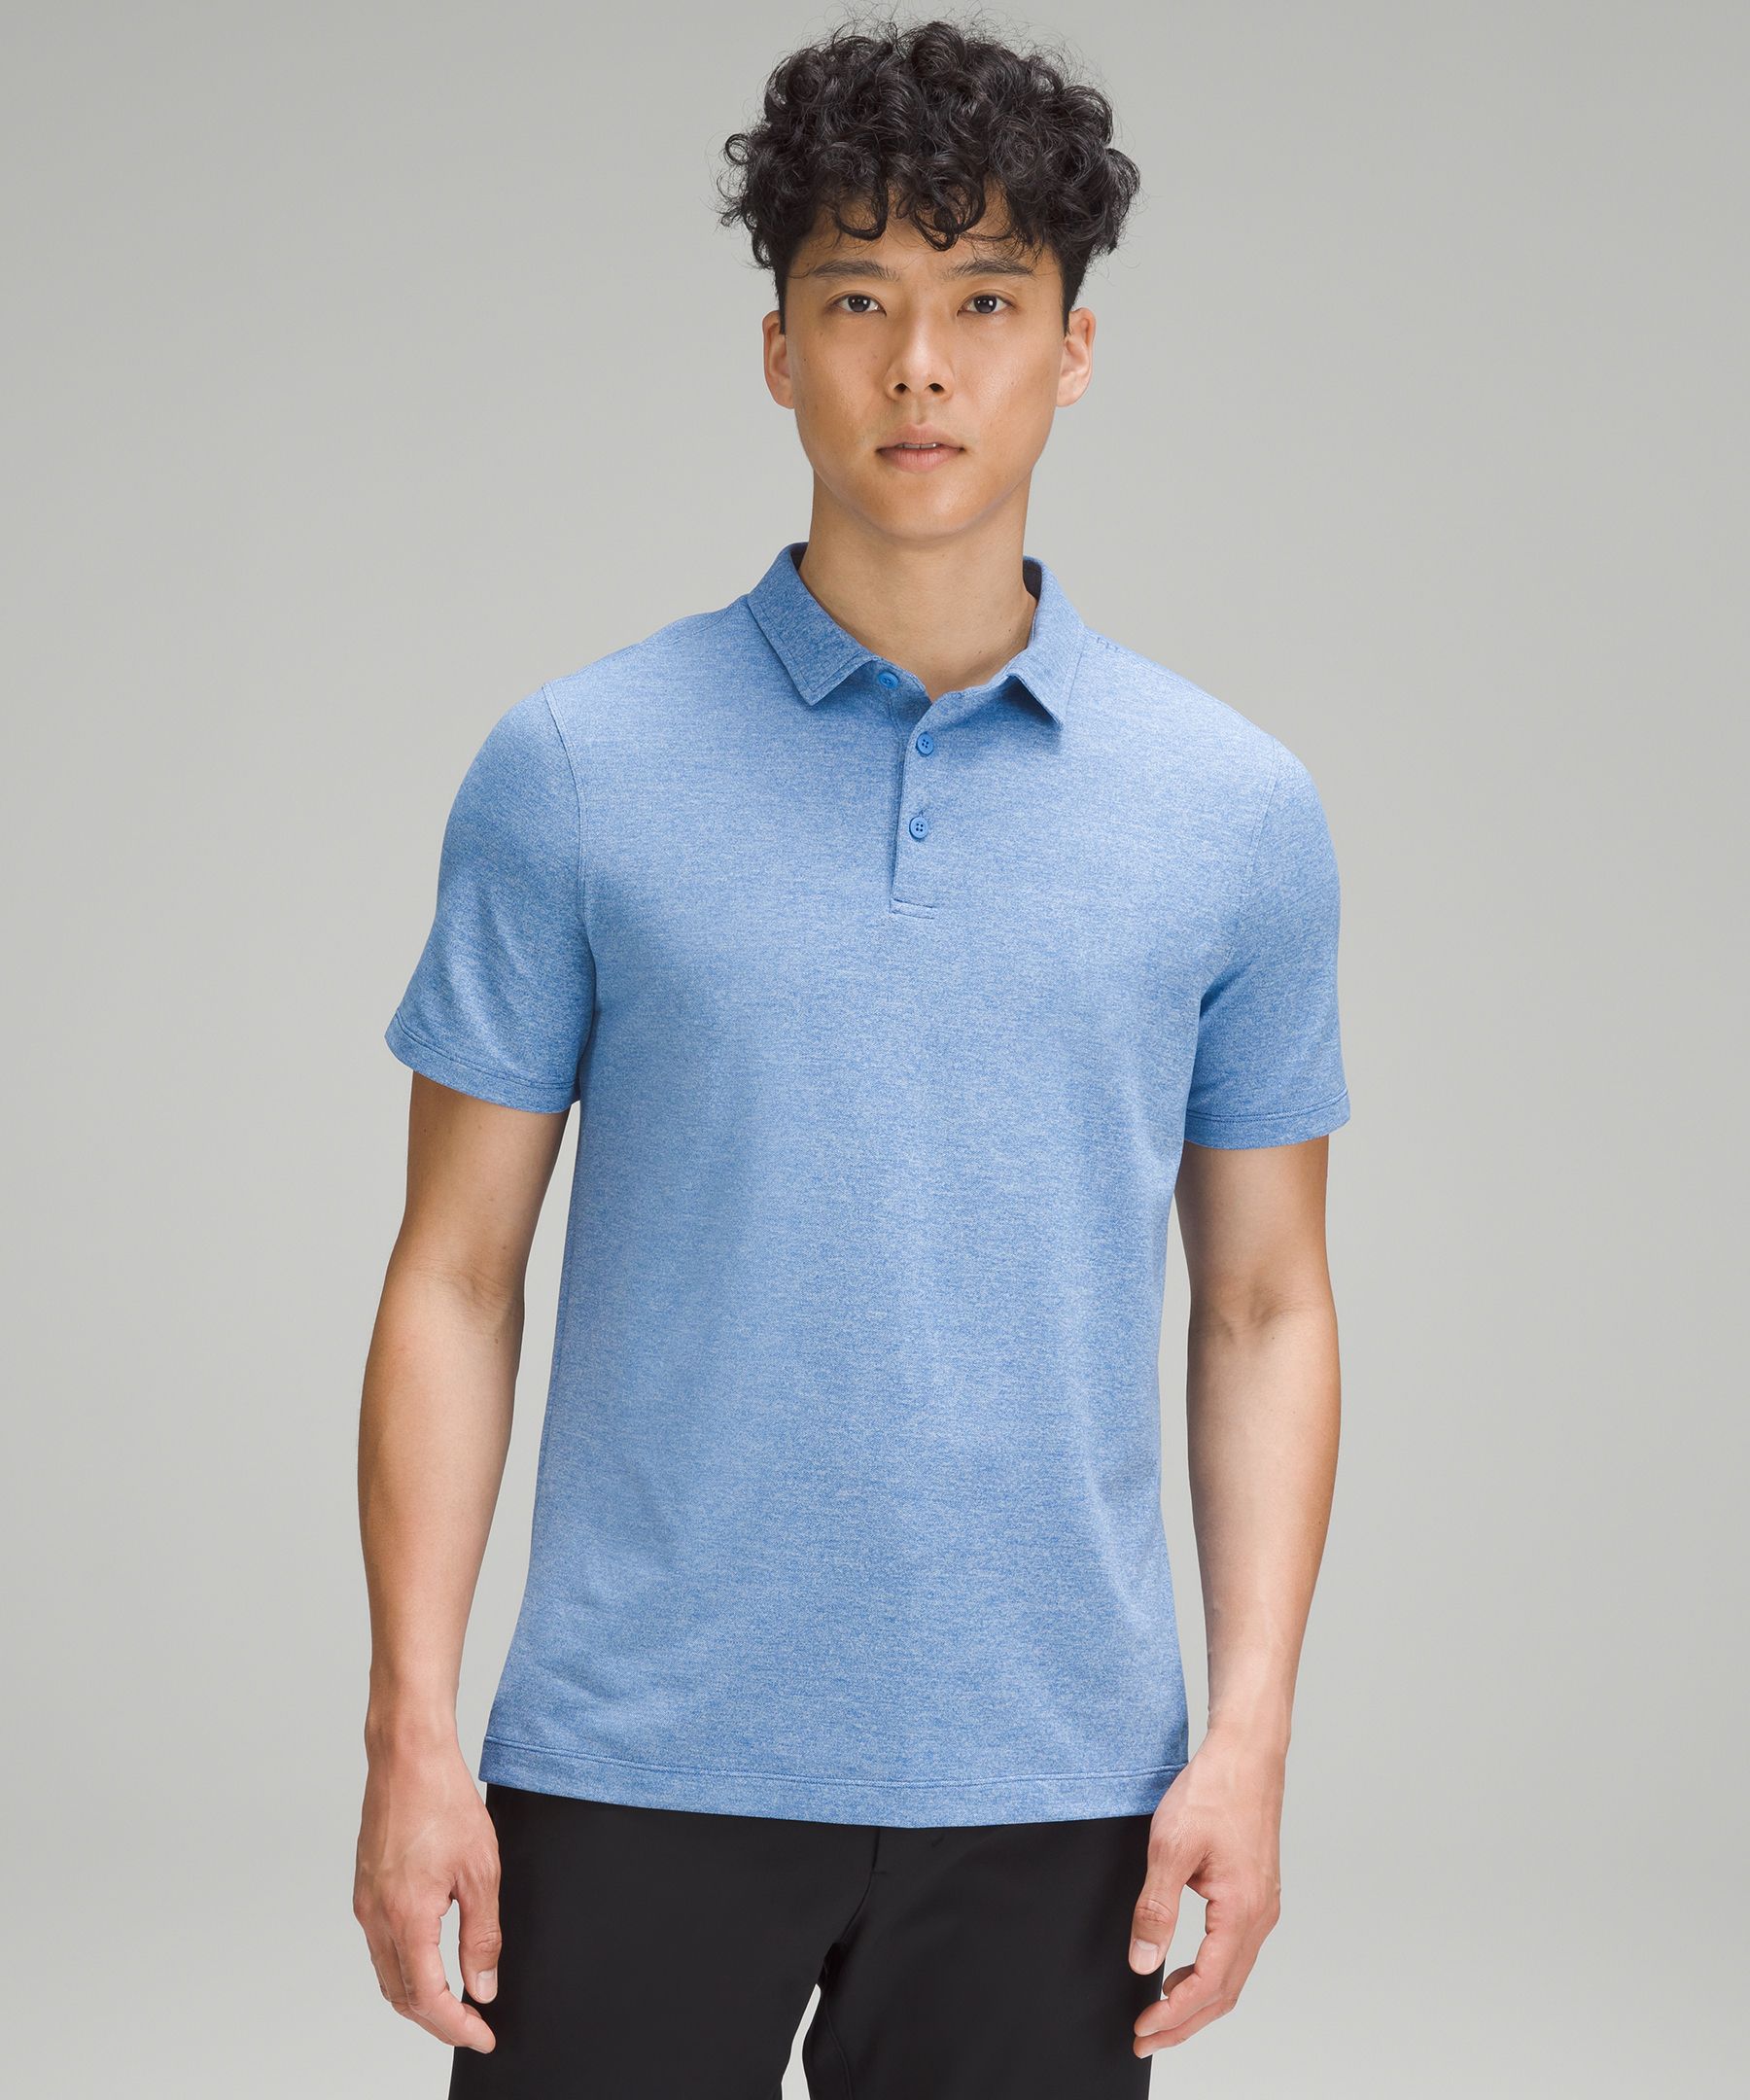 Lululemon Evolution Short-Sleeve Polo Shirt